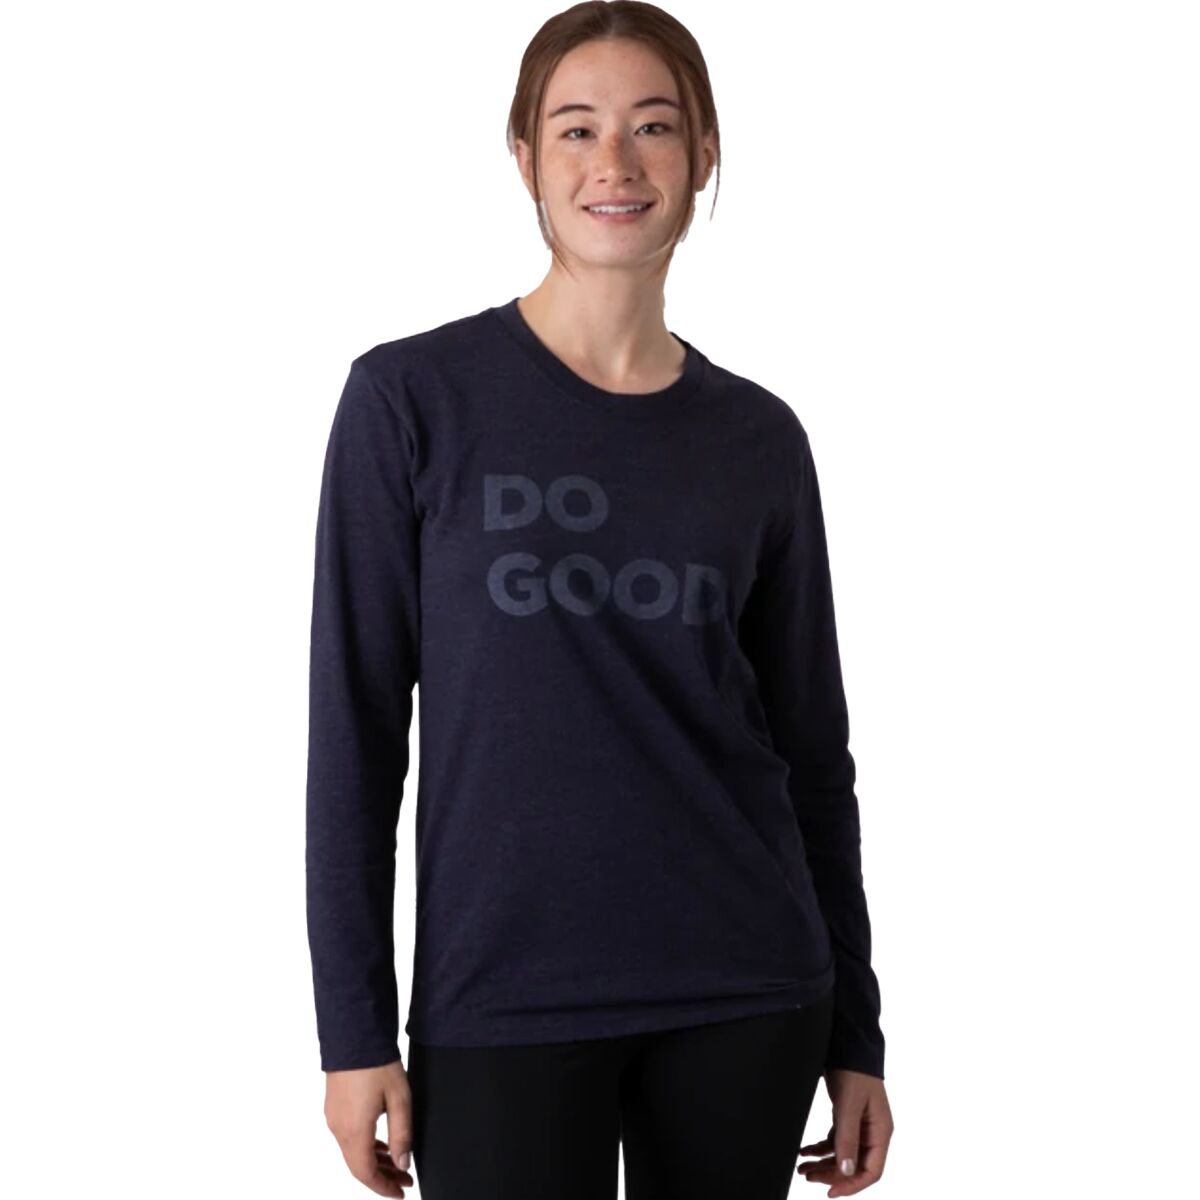 Cotopaxi Do Good Long-Sleeve T-Shirt - Women's